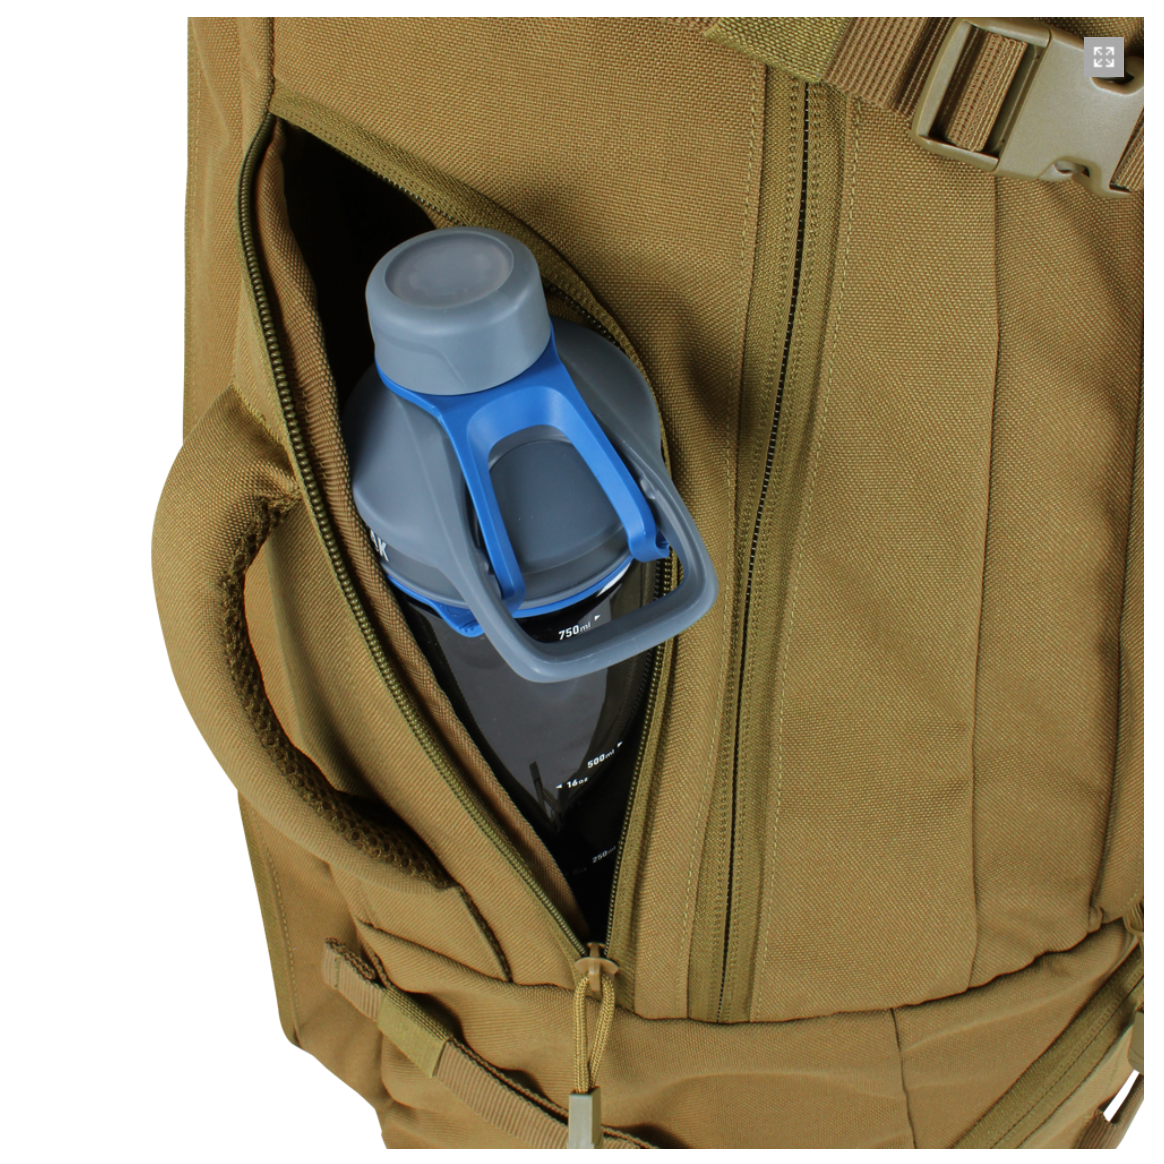 Condor Trekker Pack OD Green Bags, Packs and Cases Condor Outdoor Tactical Gear Supplier Tactical Distributors Australia